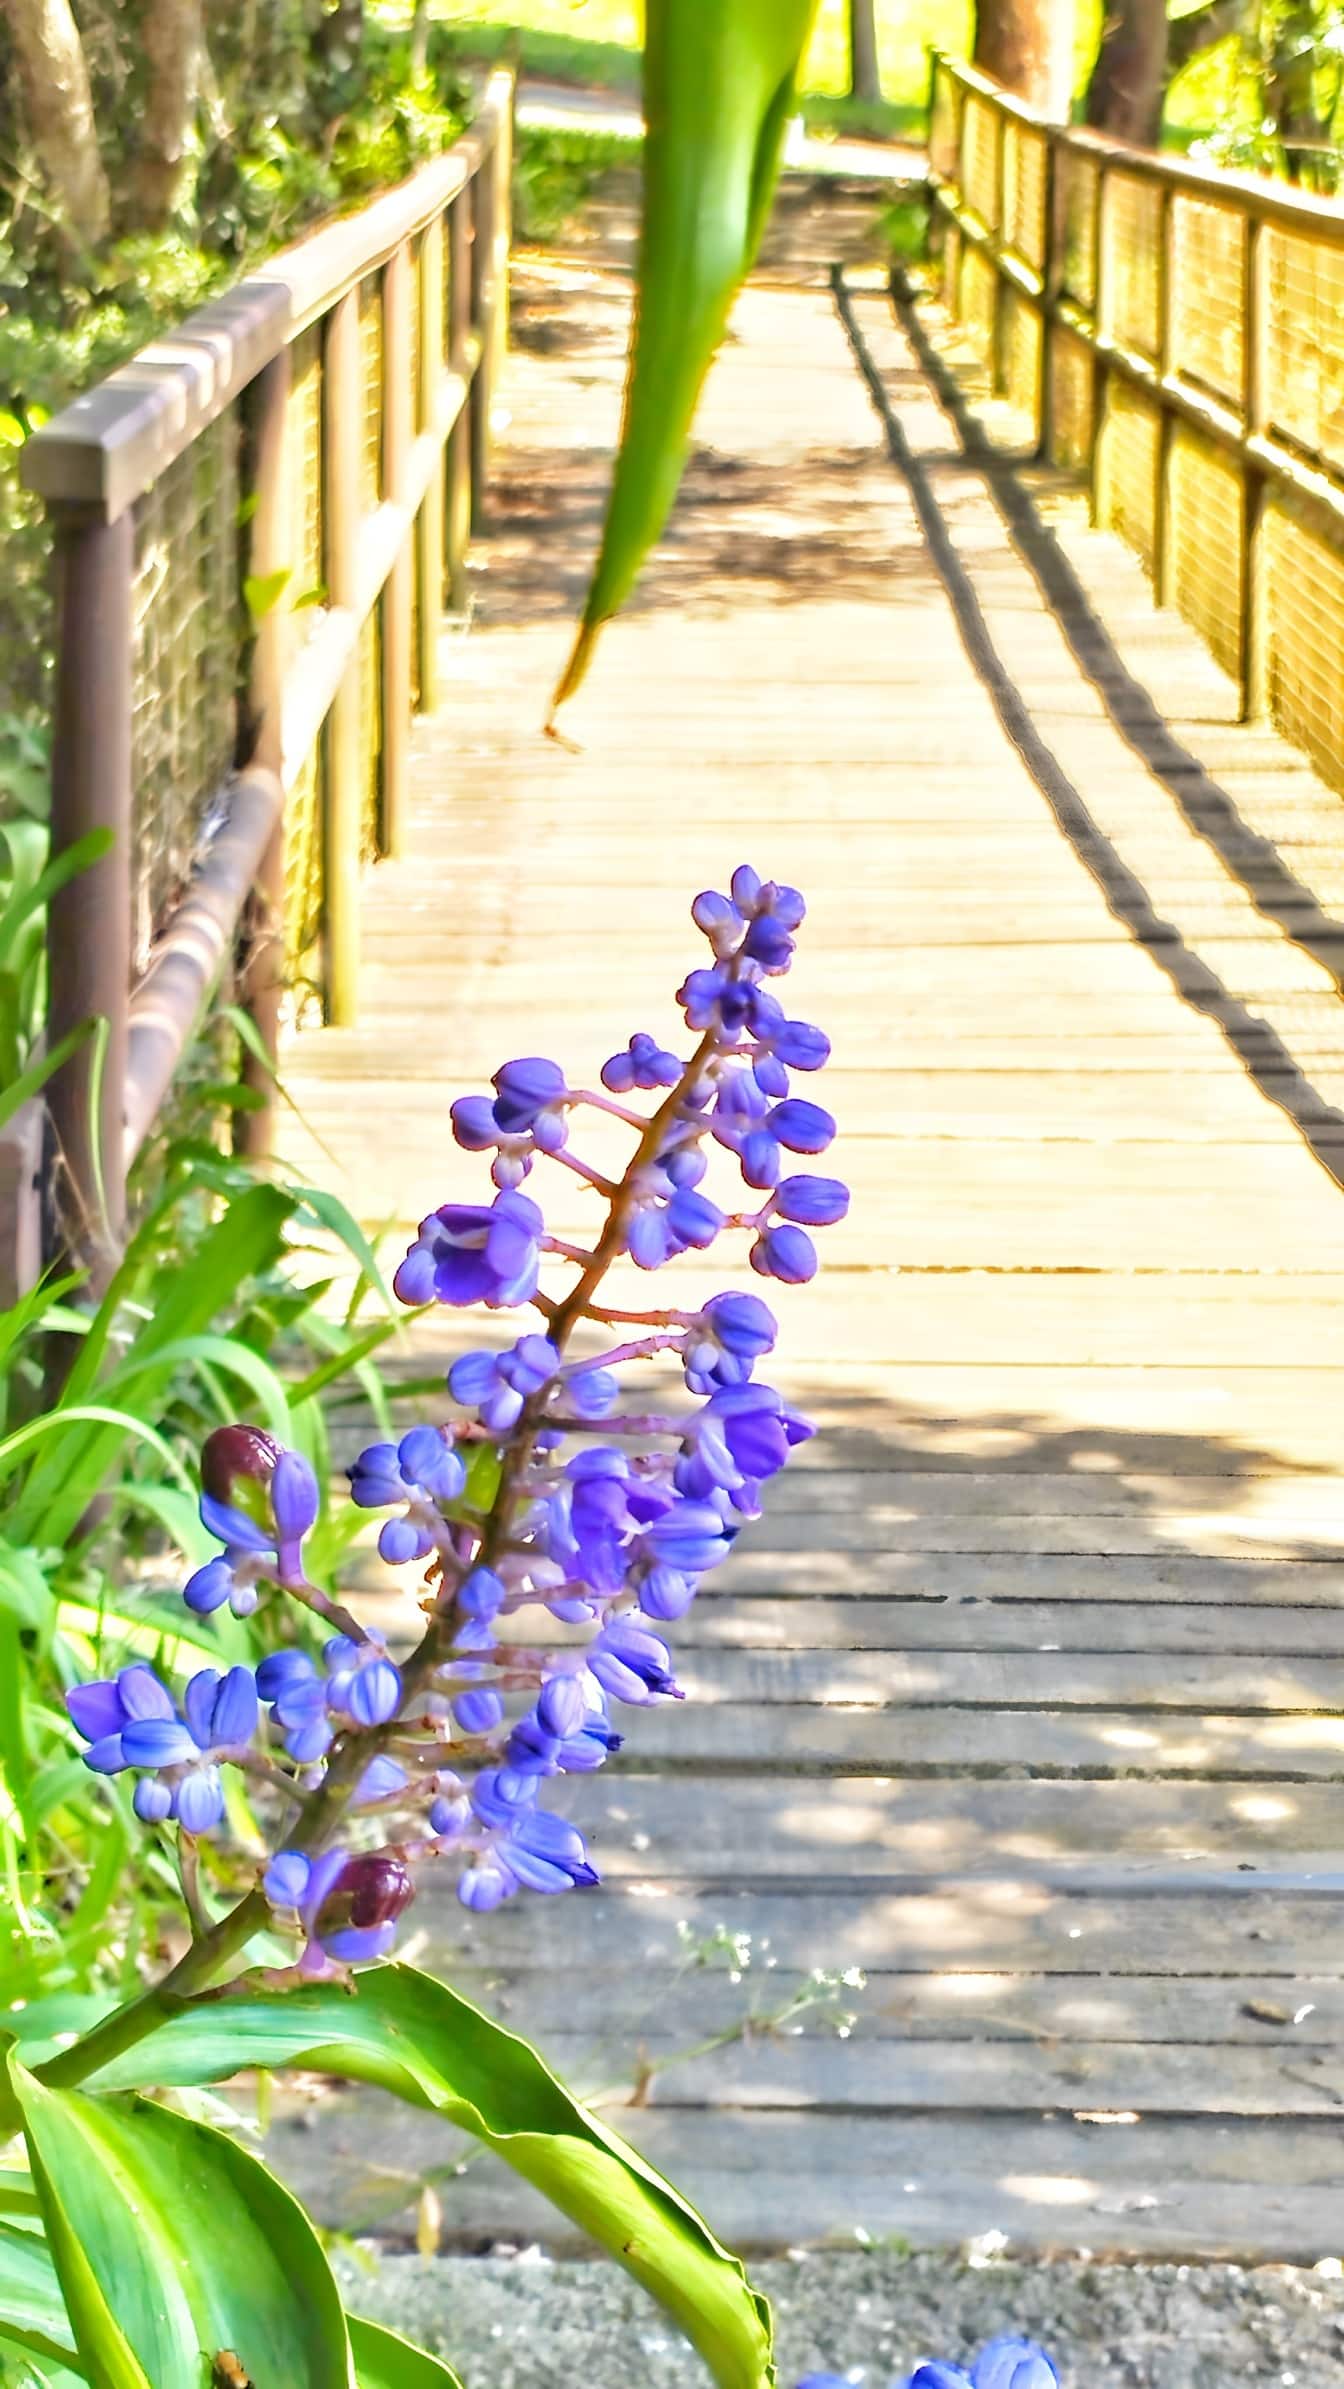 Bunga jahe biru (Dichorisandra thyrsiflora) di jalan setapak melintasi jembatan kayu di kebun raya